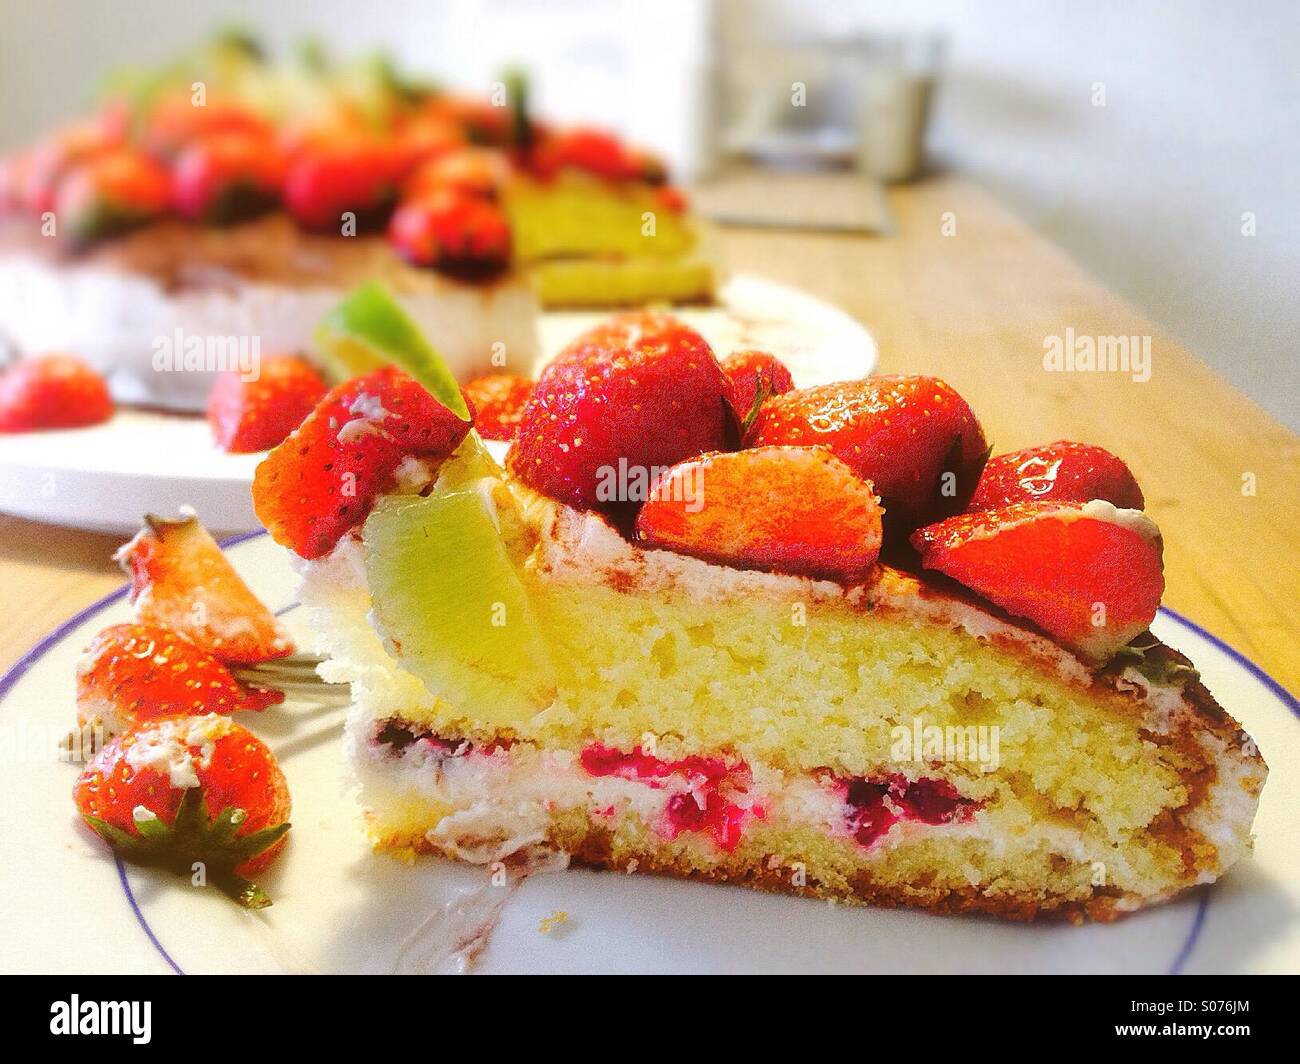 Strawberry_cake-S076JM.jpg